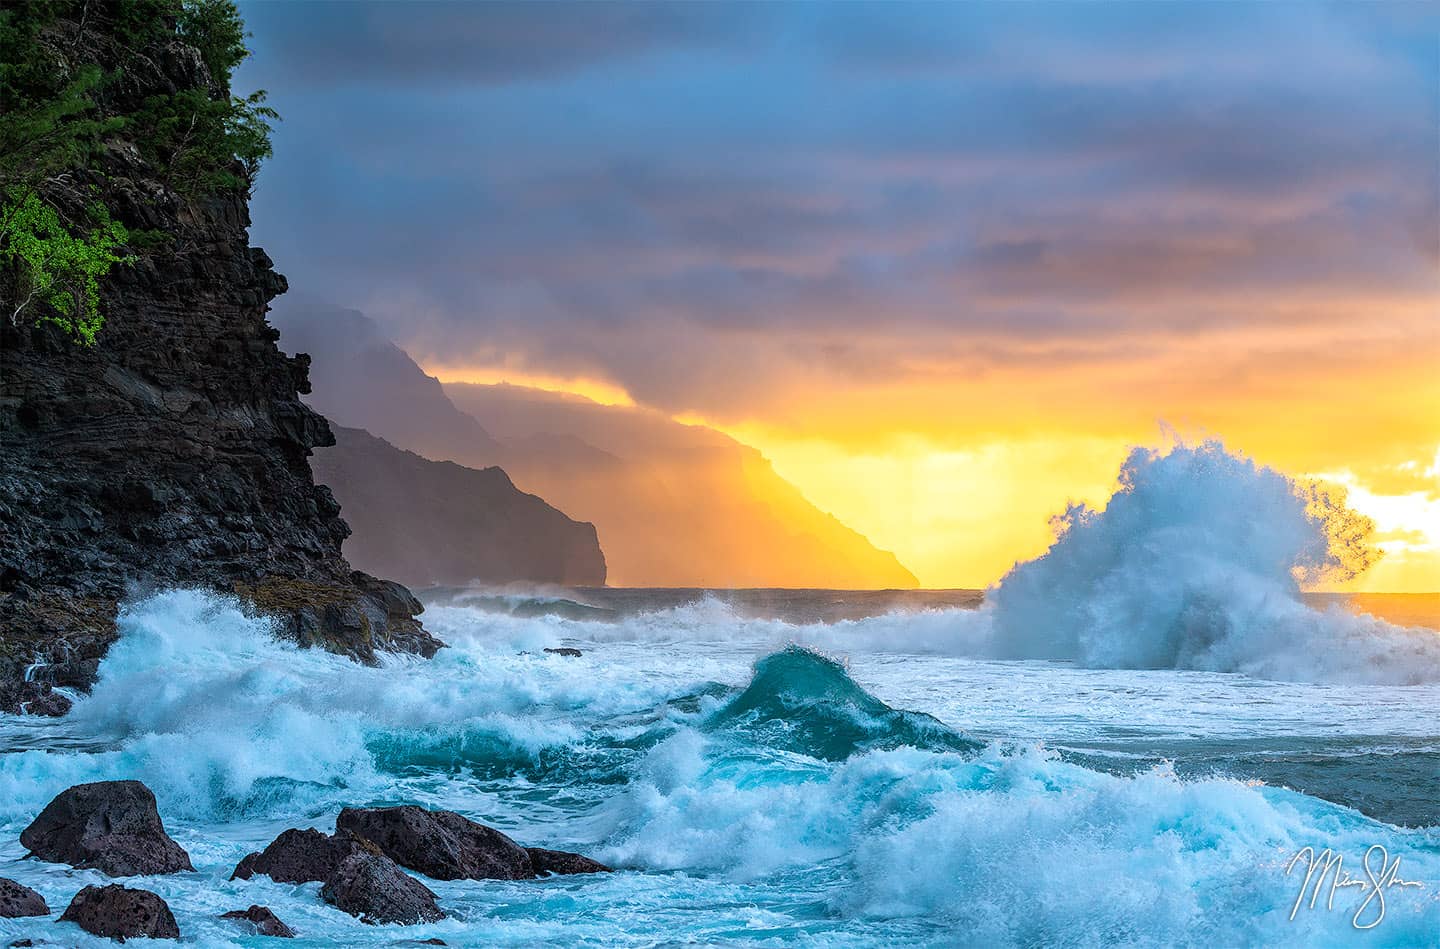 A massive wave crashes in the rocks below the Napali Coast of Kauai